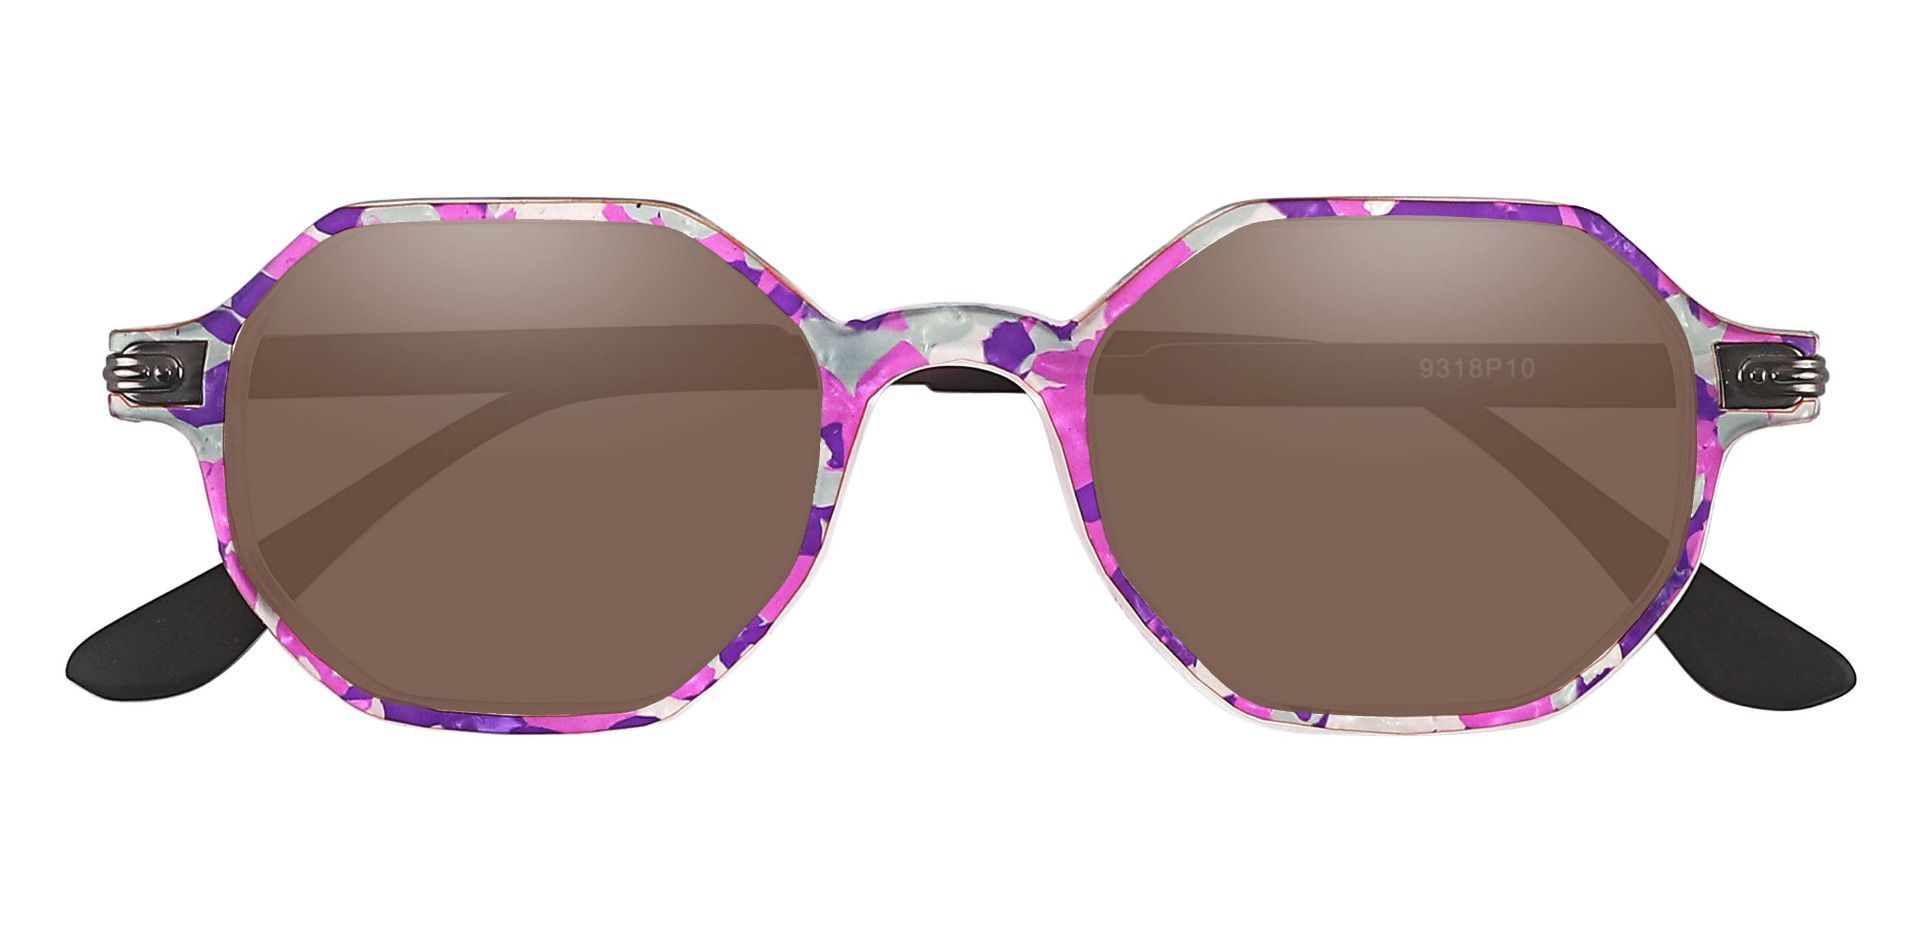 Bogart Geometric Non-Rx Sunglasses - Purple Frame With Brown Lenses